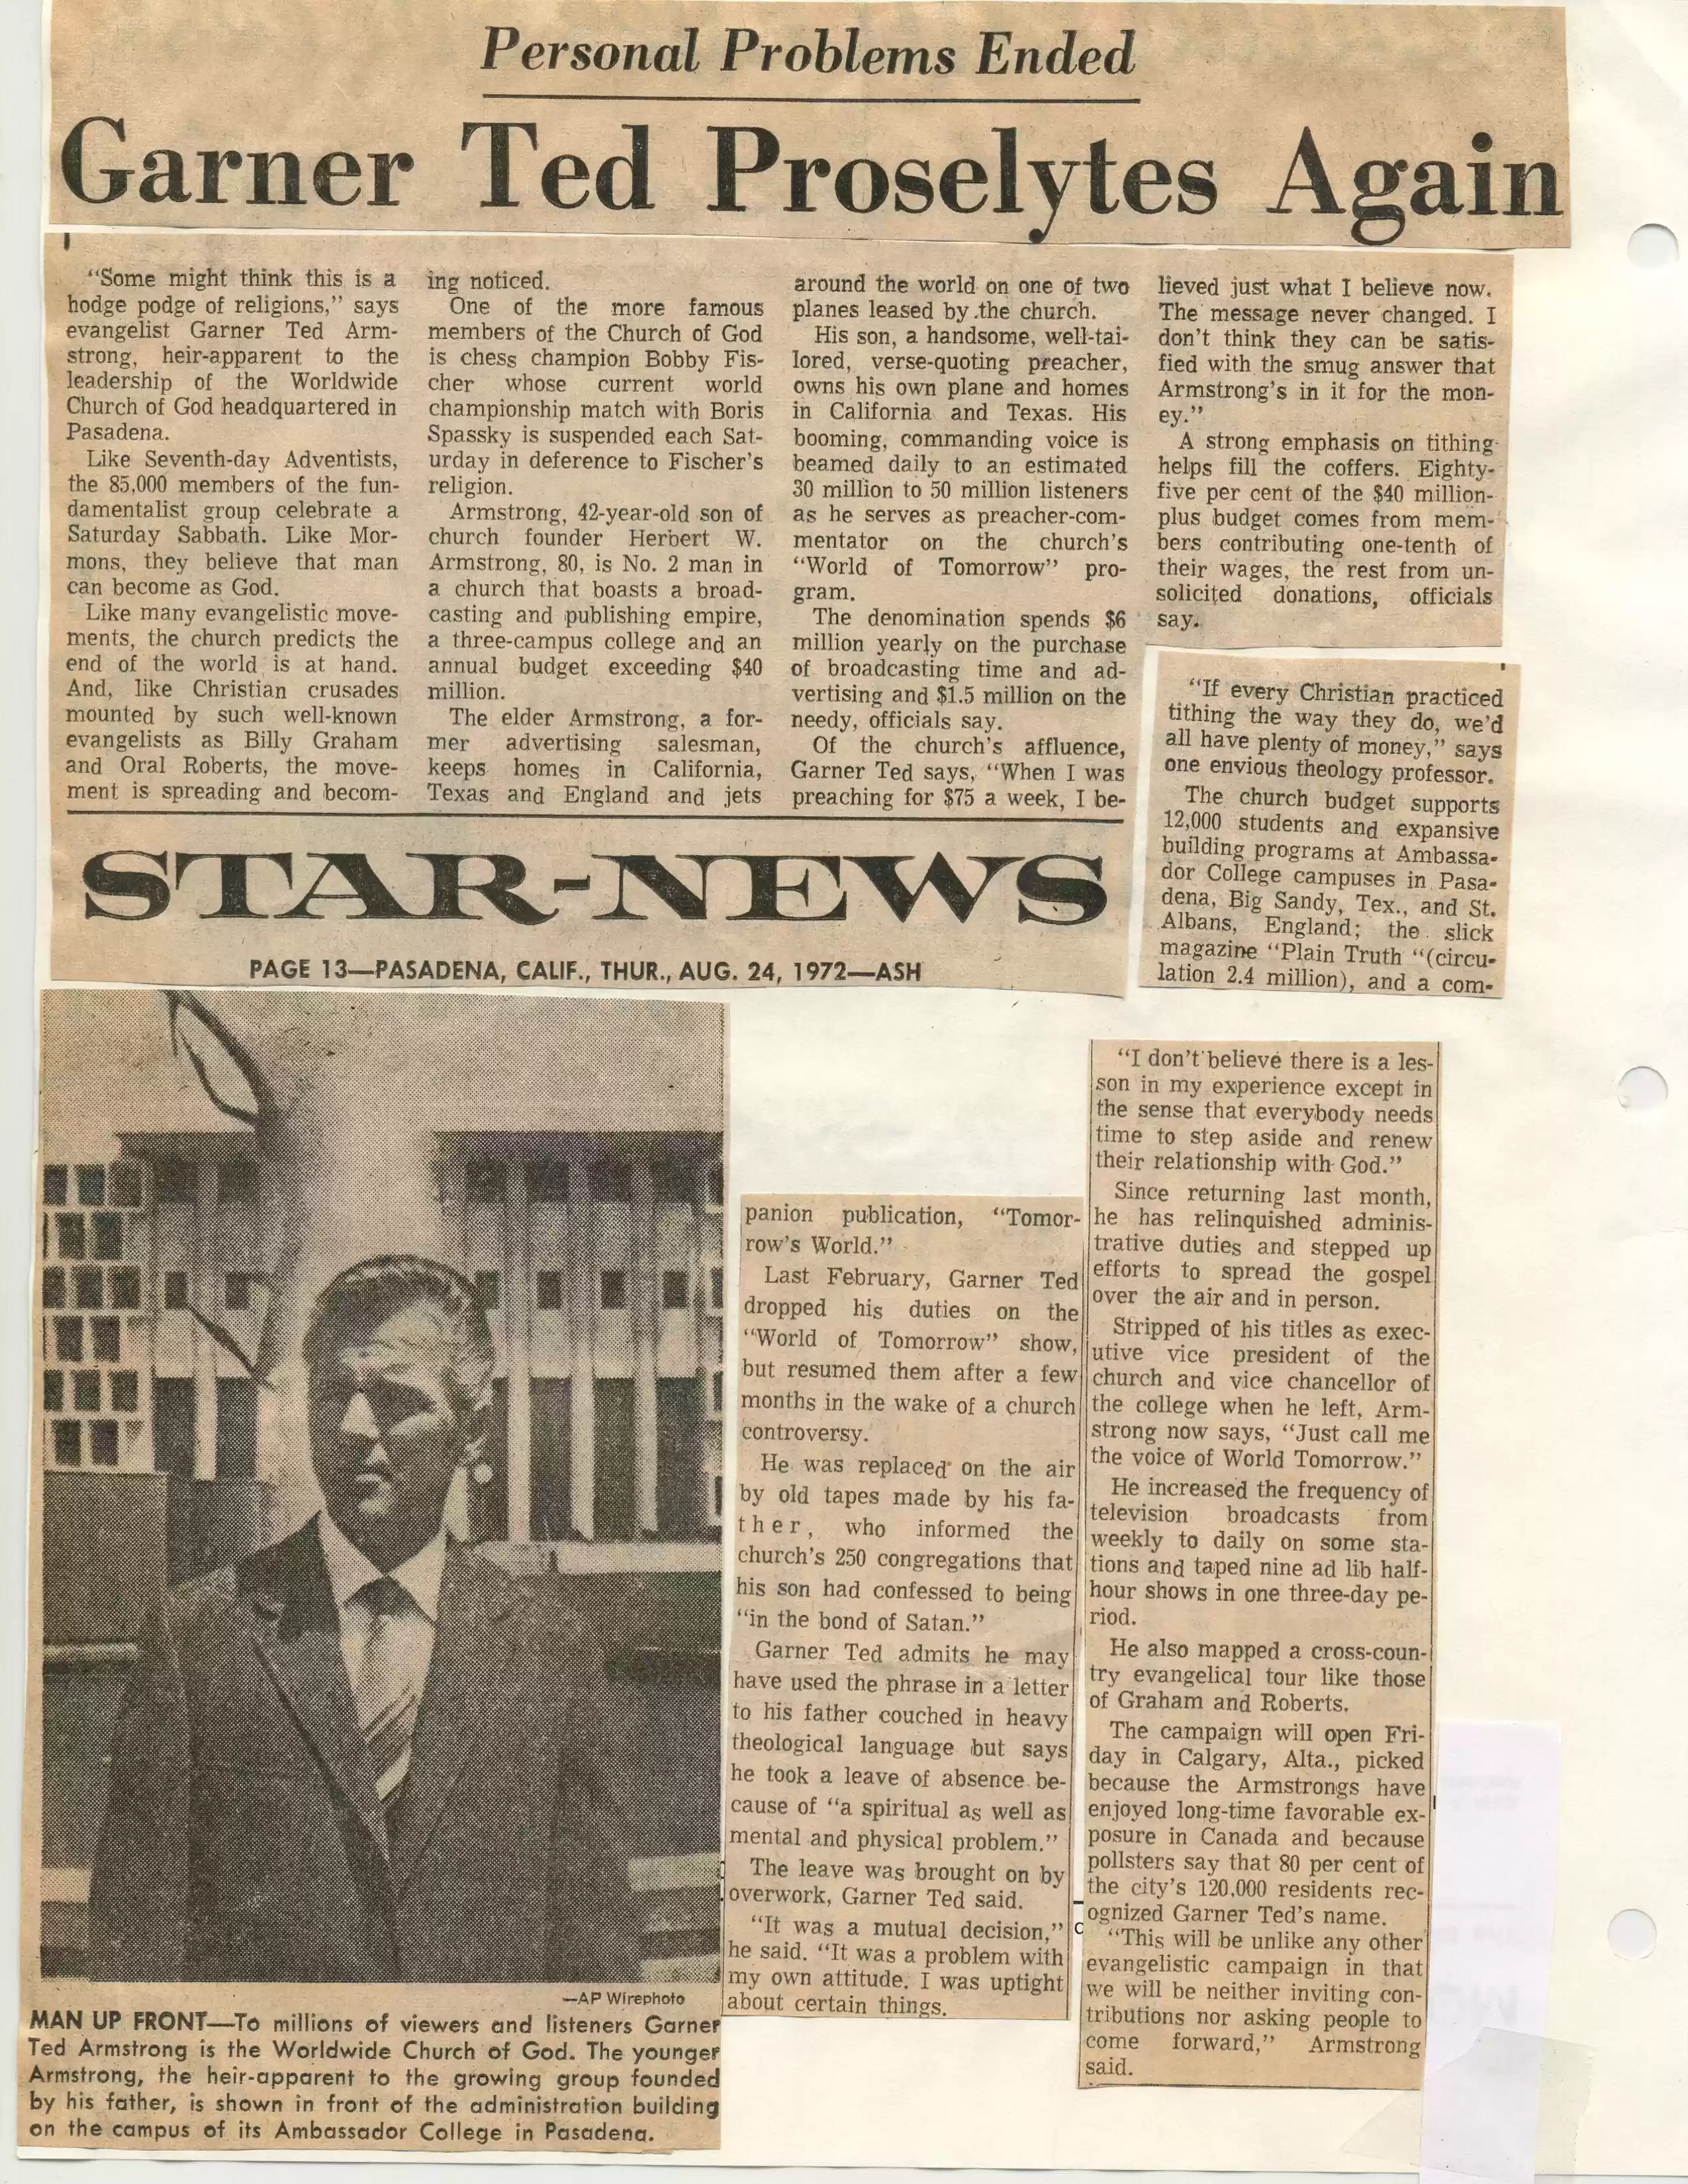 Pasadena Star News, 8-24-72